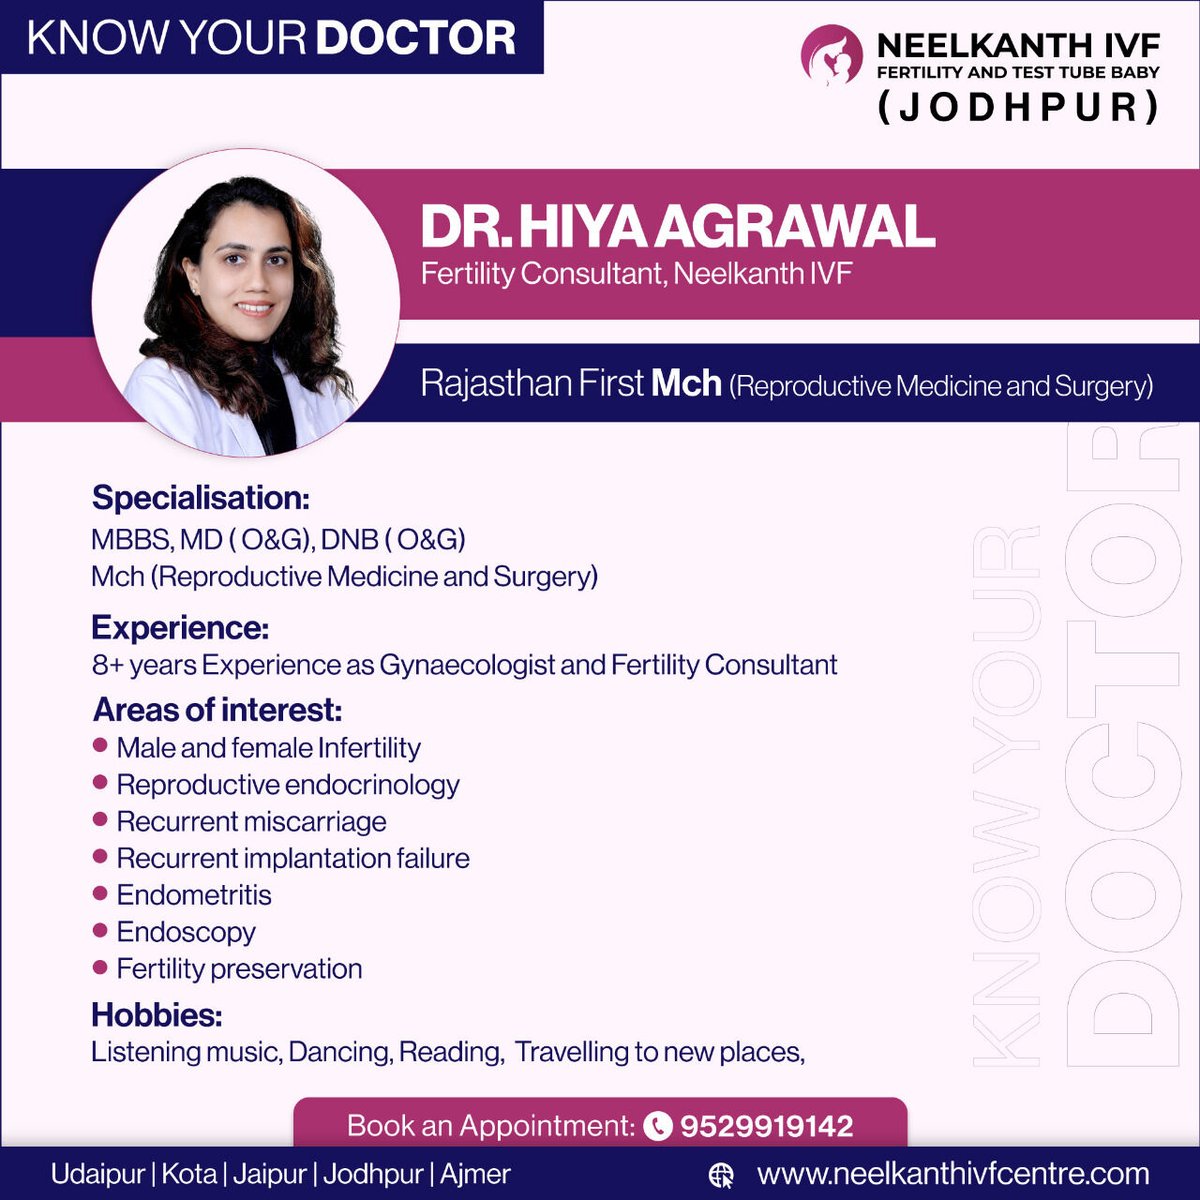 Meet Dr. Hiya Agrawal from Neelkanth IVF, Jodhpur.
.
.
#Knowyourdoctor #fertilityjourney #fertilityexpert #fertilitydoctor #pregnancyjourney #femalefertility #maleinfertility #fertilityspecialist #ferilitytreatment #ivfsupport #ivfsuccess #parenthood #infertility